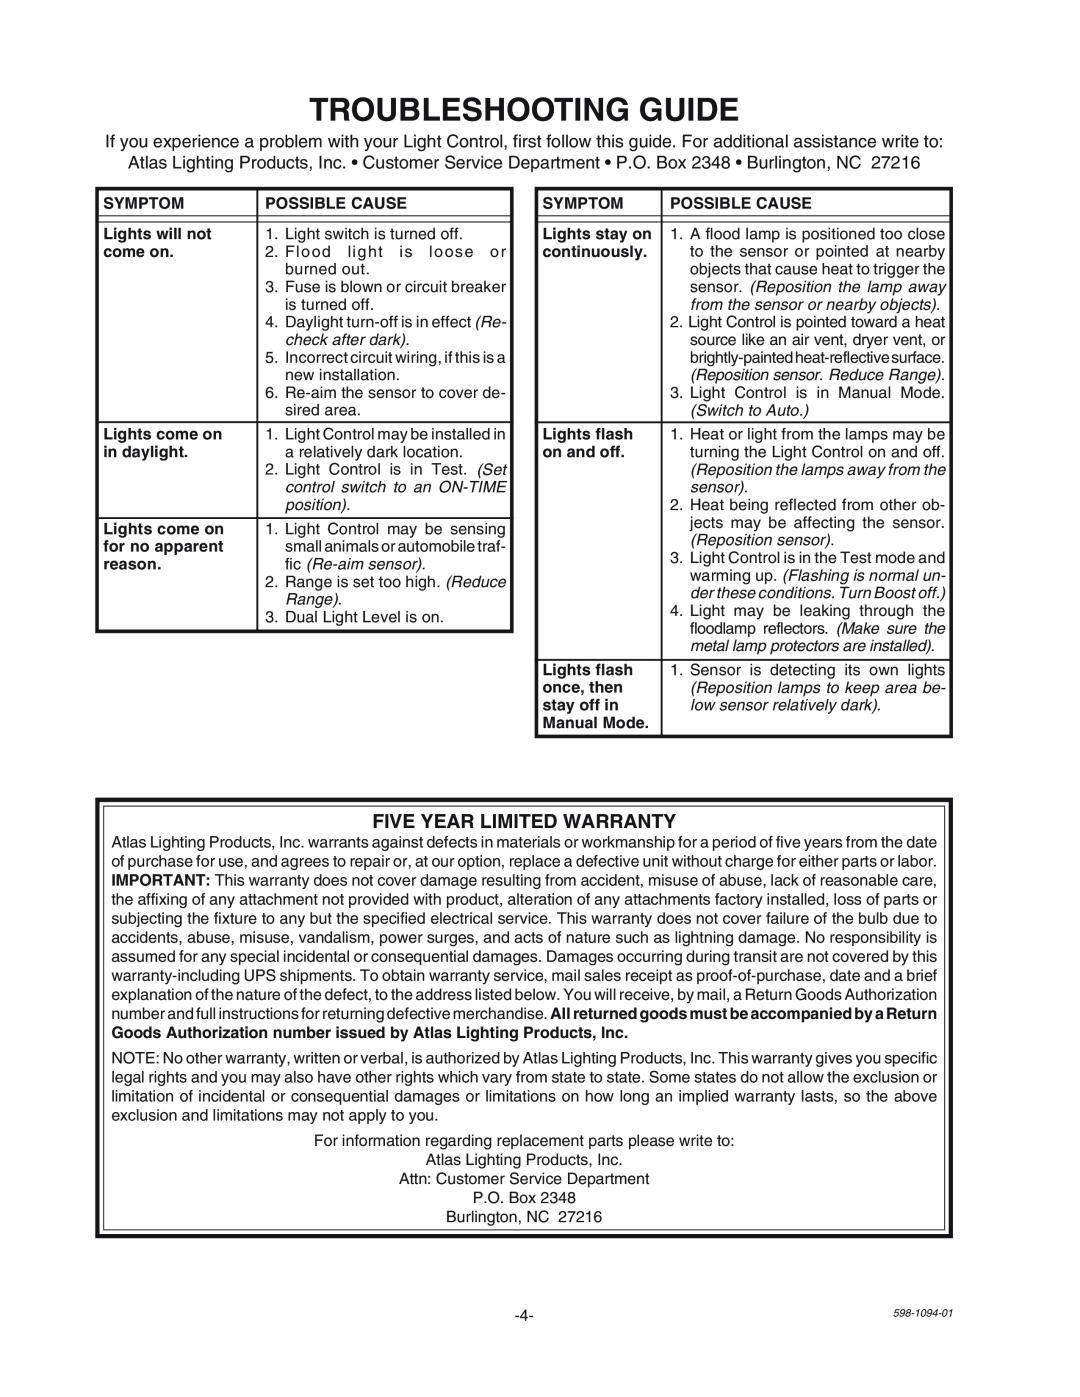 Atlas MLGC240W, MLGC240B manual Troubleshooting Guide, Five Year Limited Warranty 